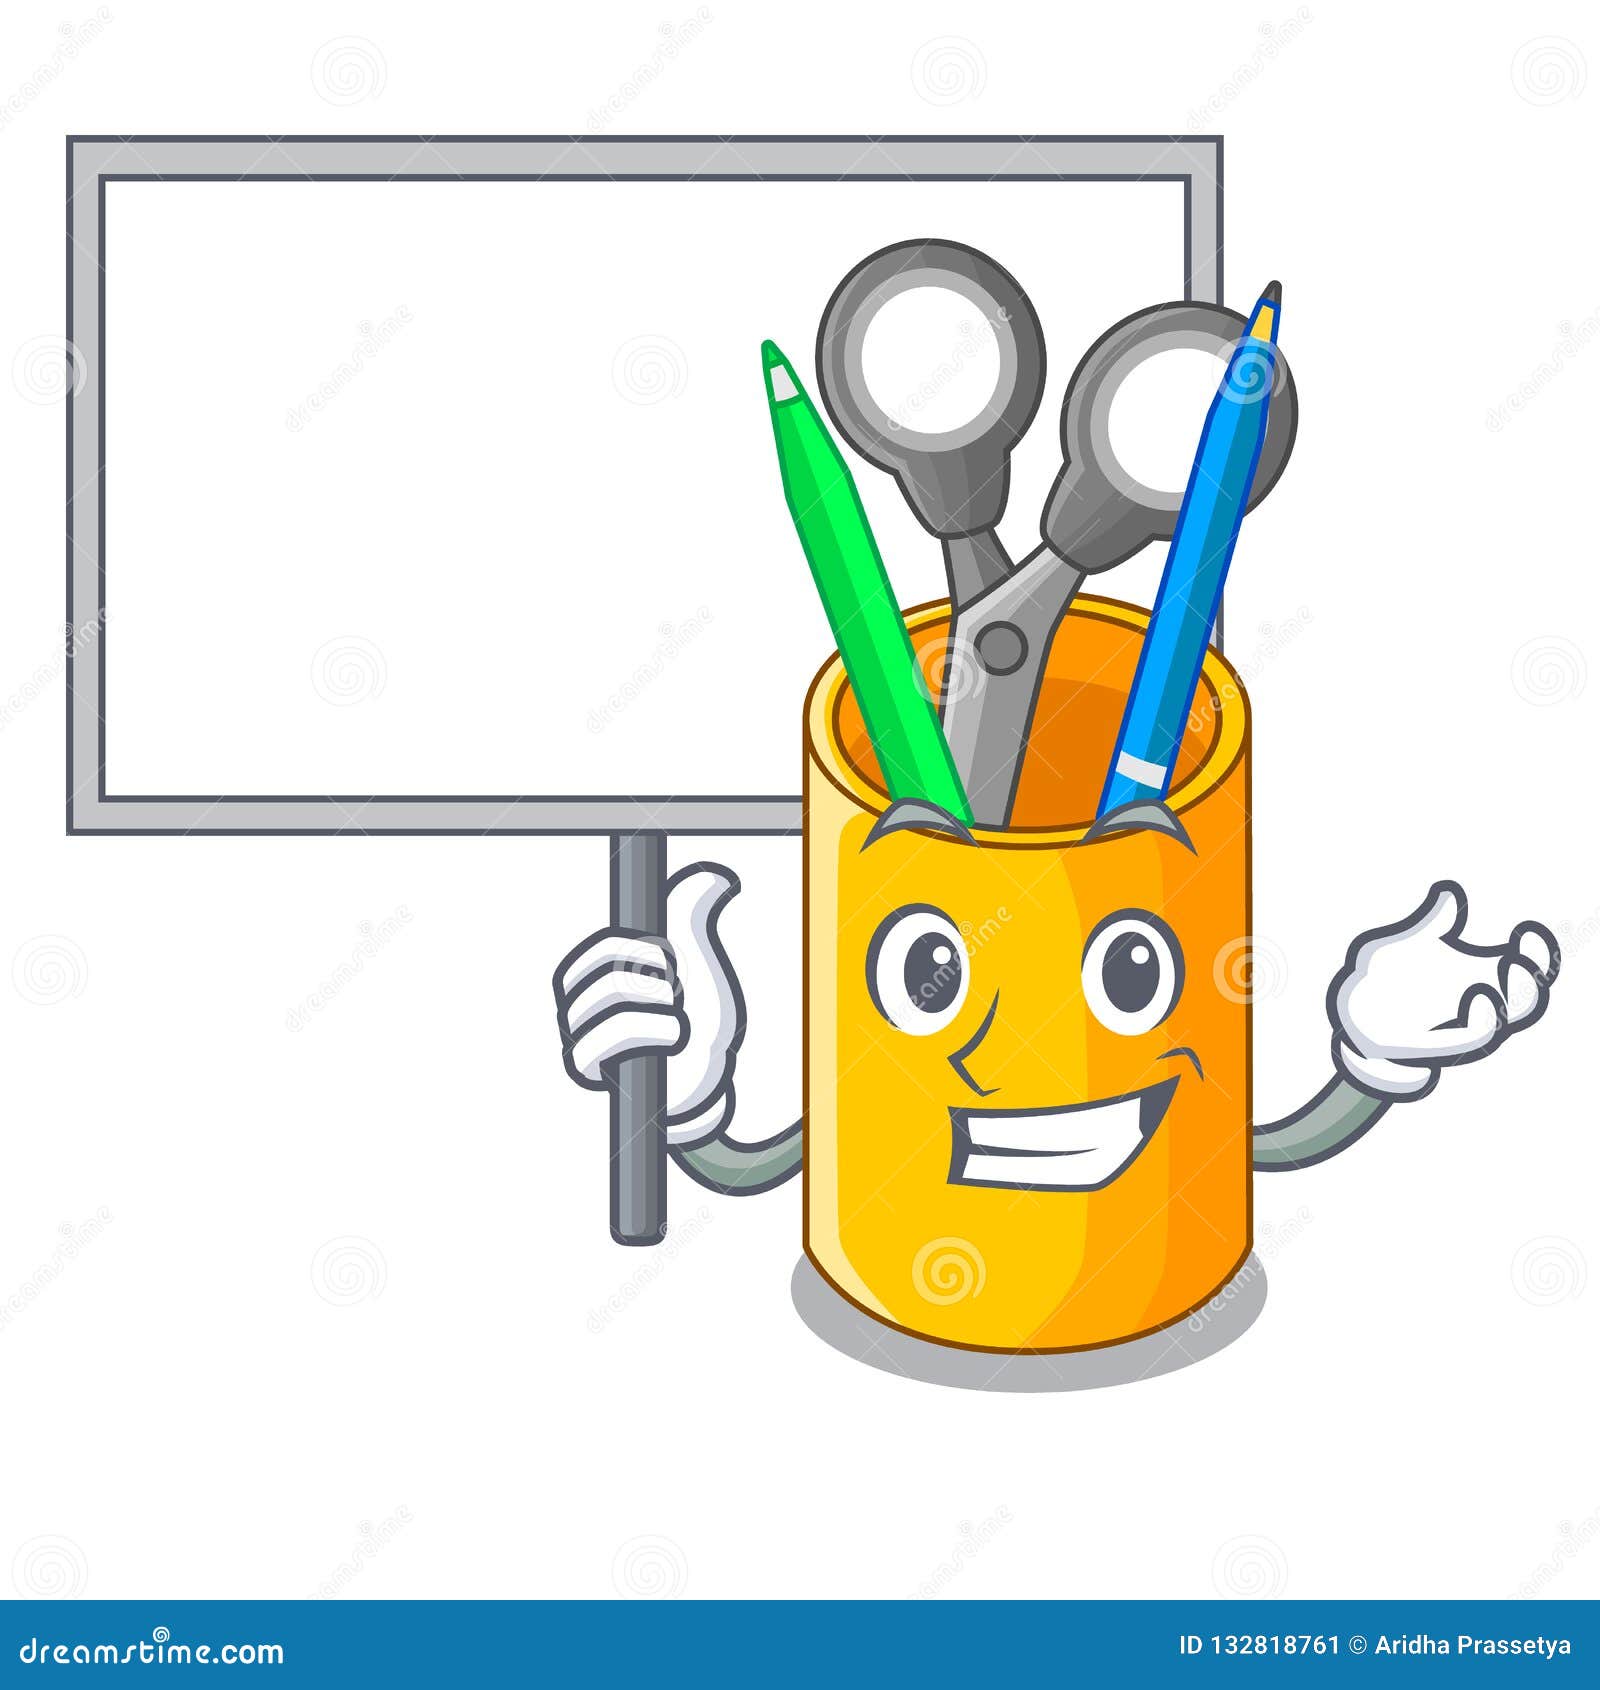 Bring Board Organizer Desktop Top View with Cartoon Stock Vector -  Illustration of object, desktop: 132818761